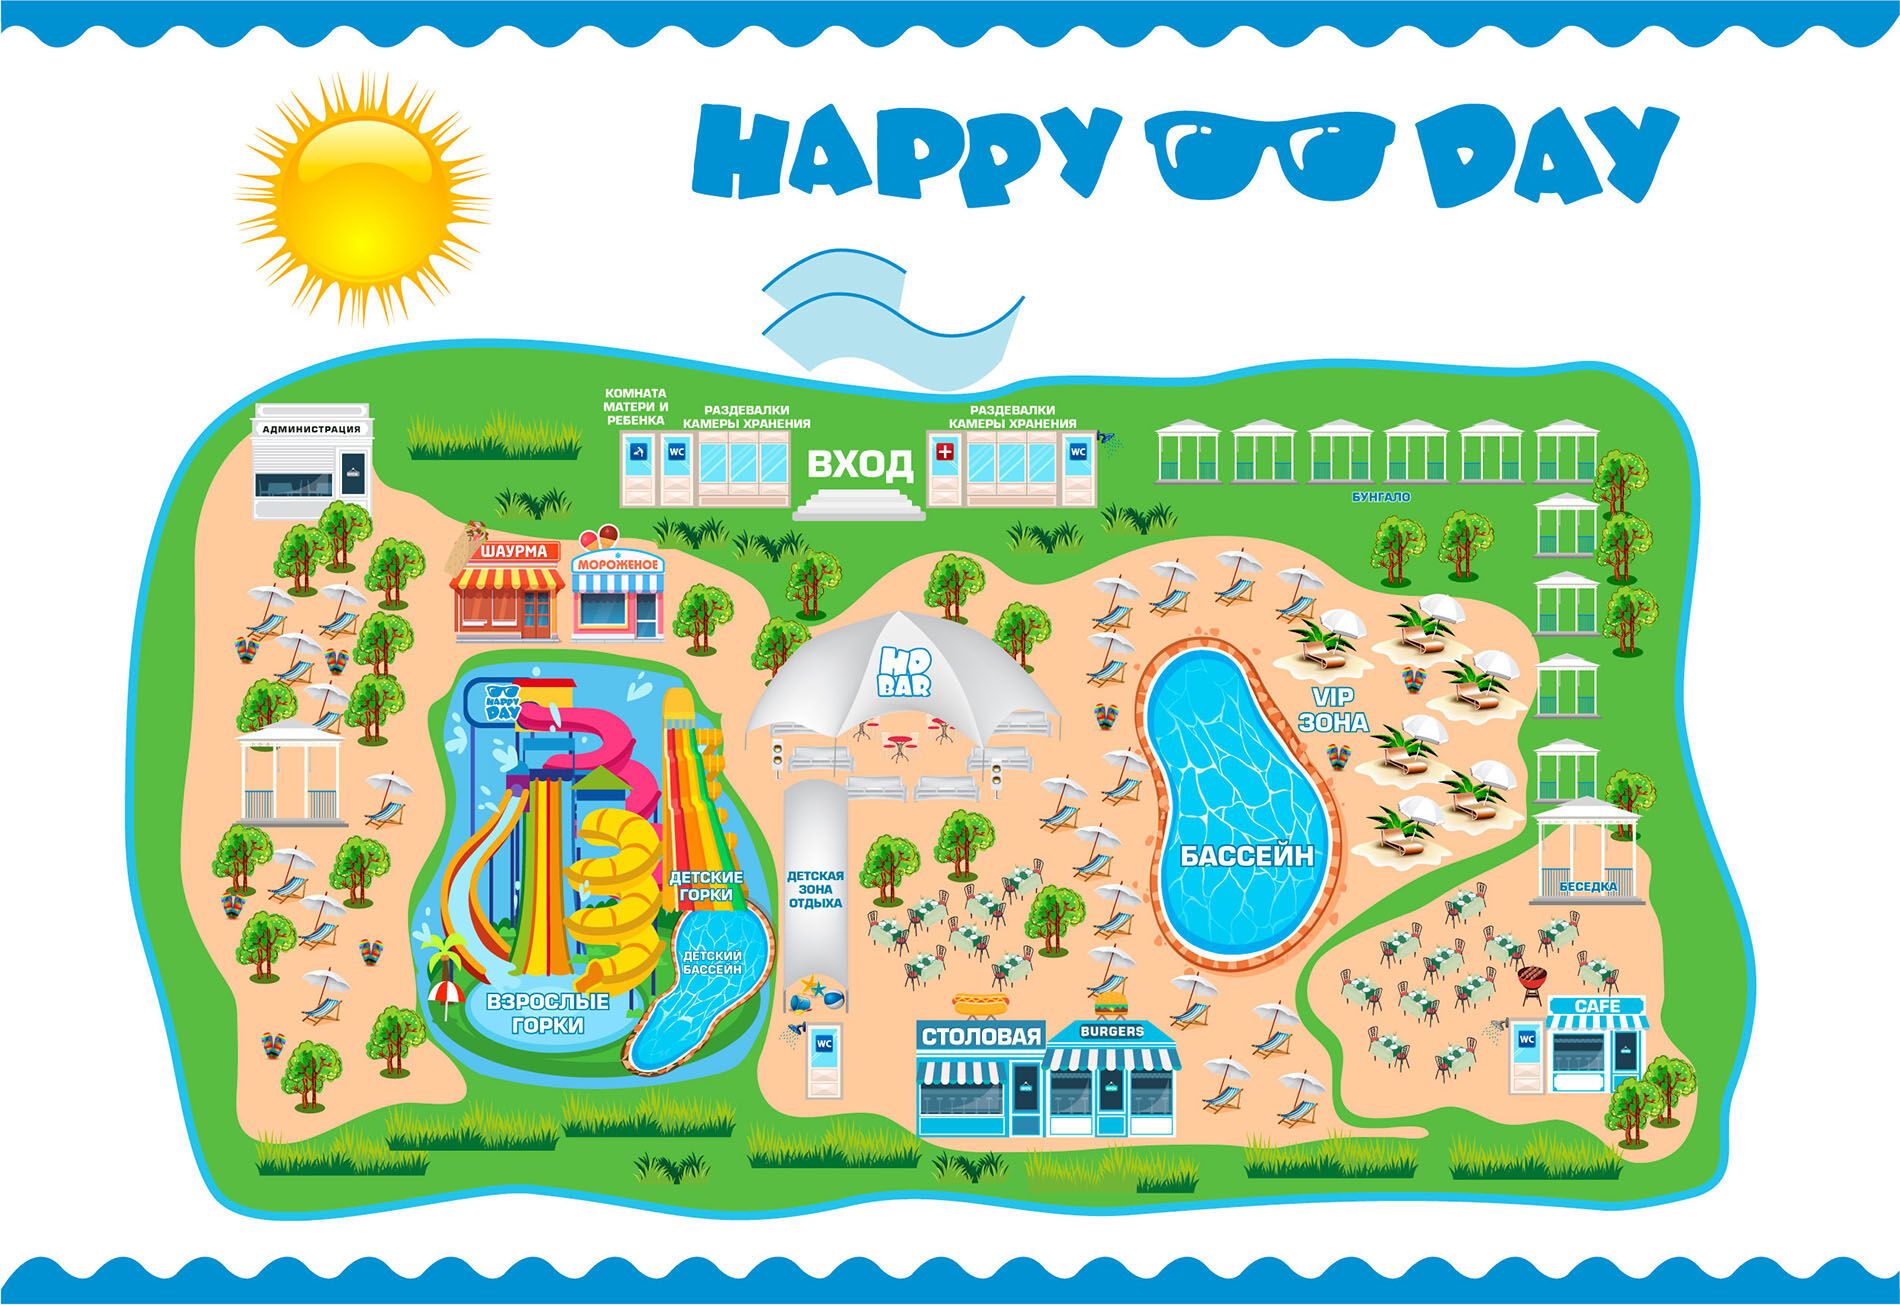 Территория аквапарка "Happy Day"